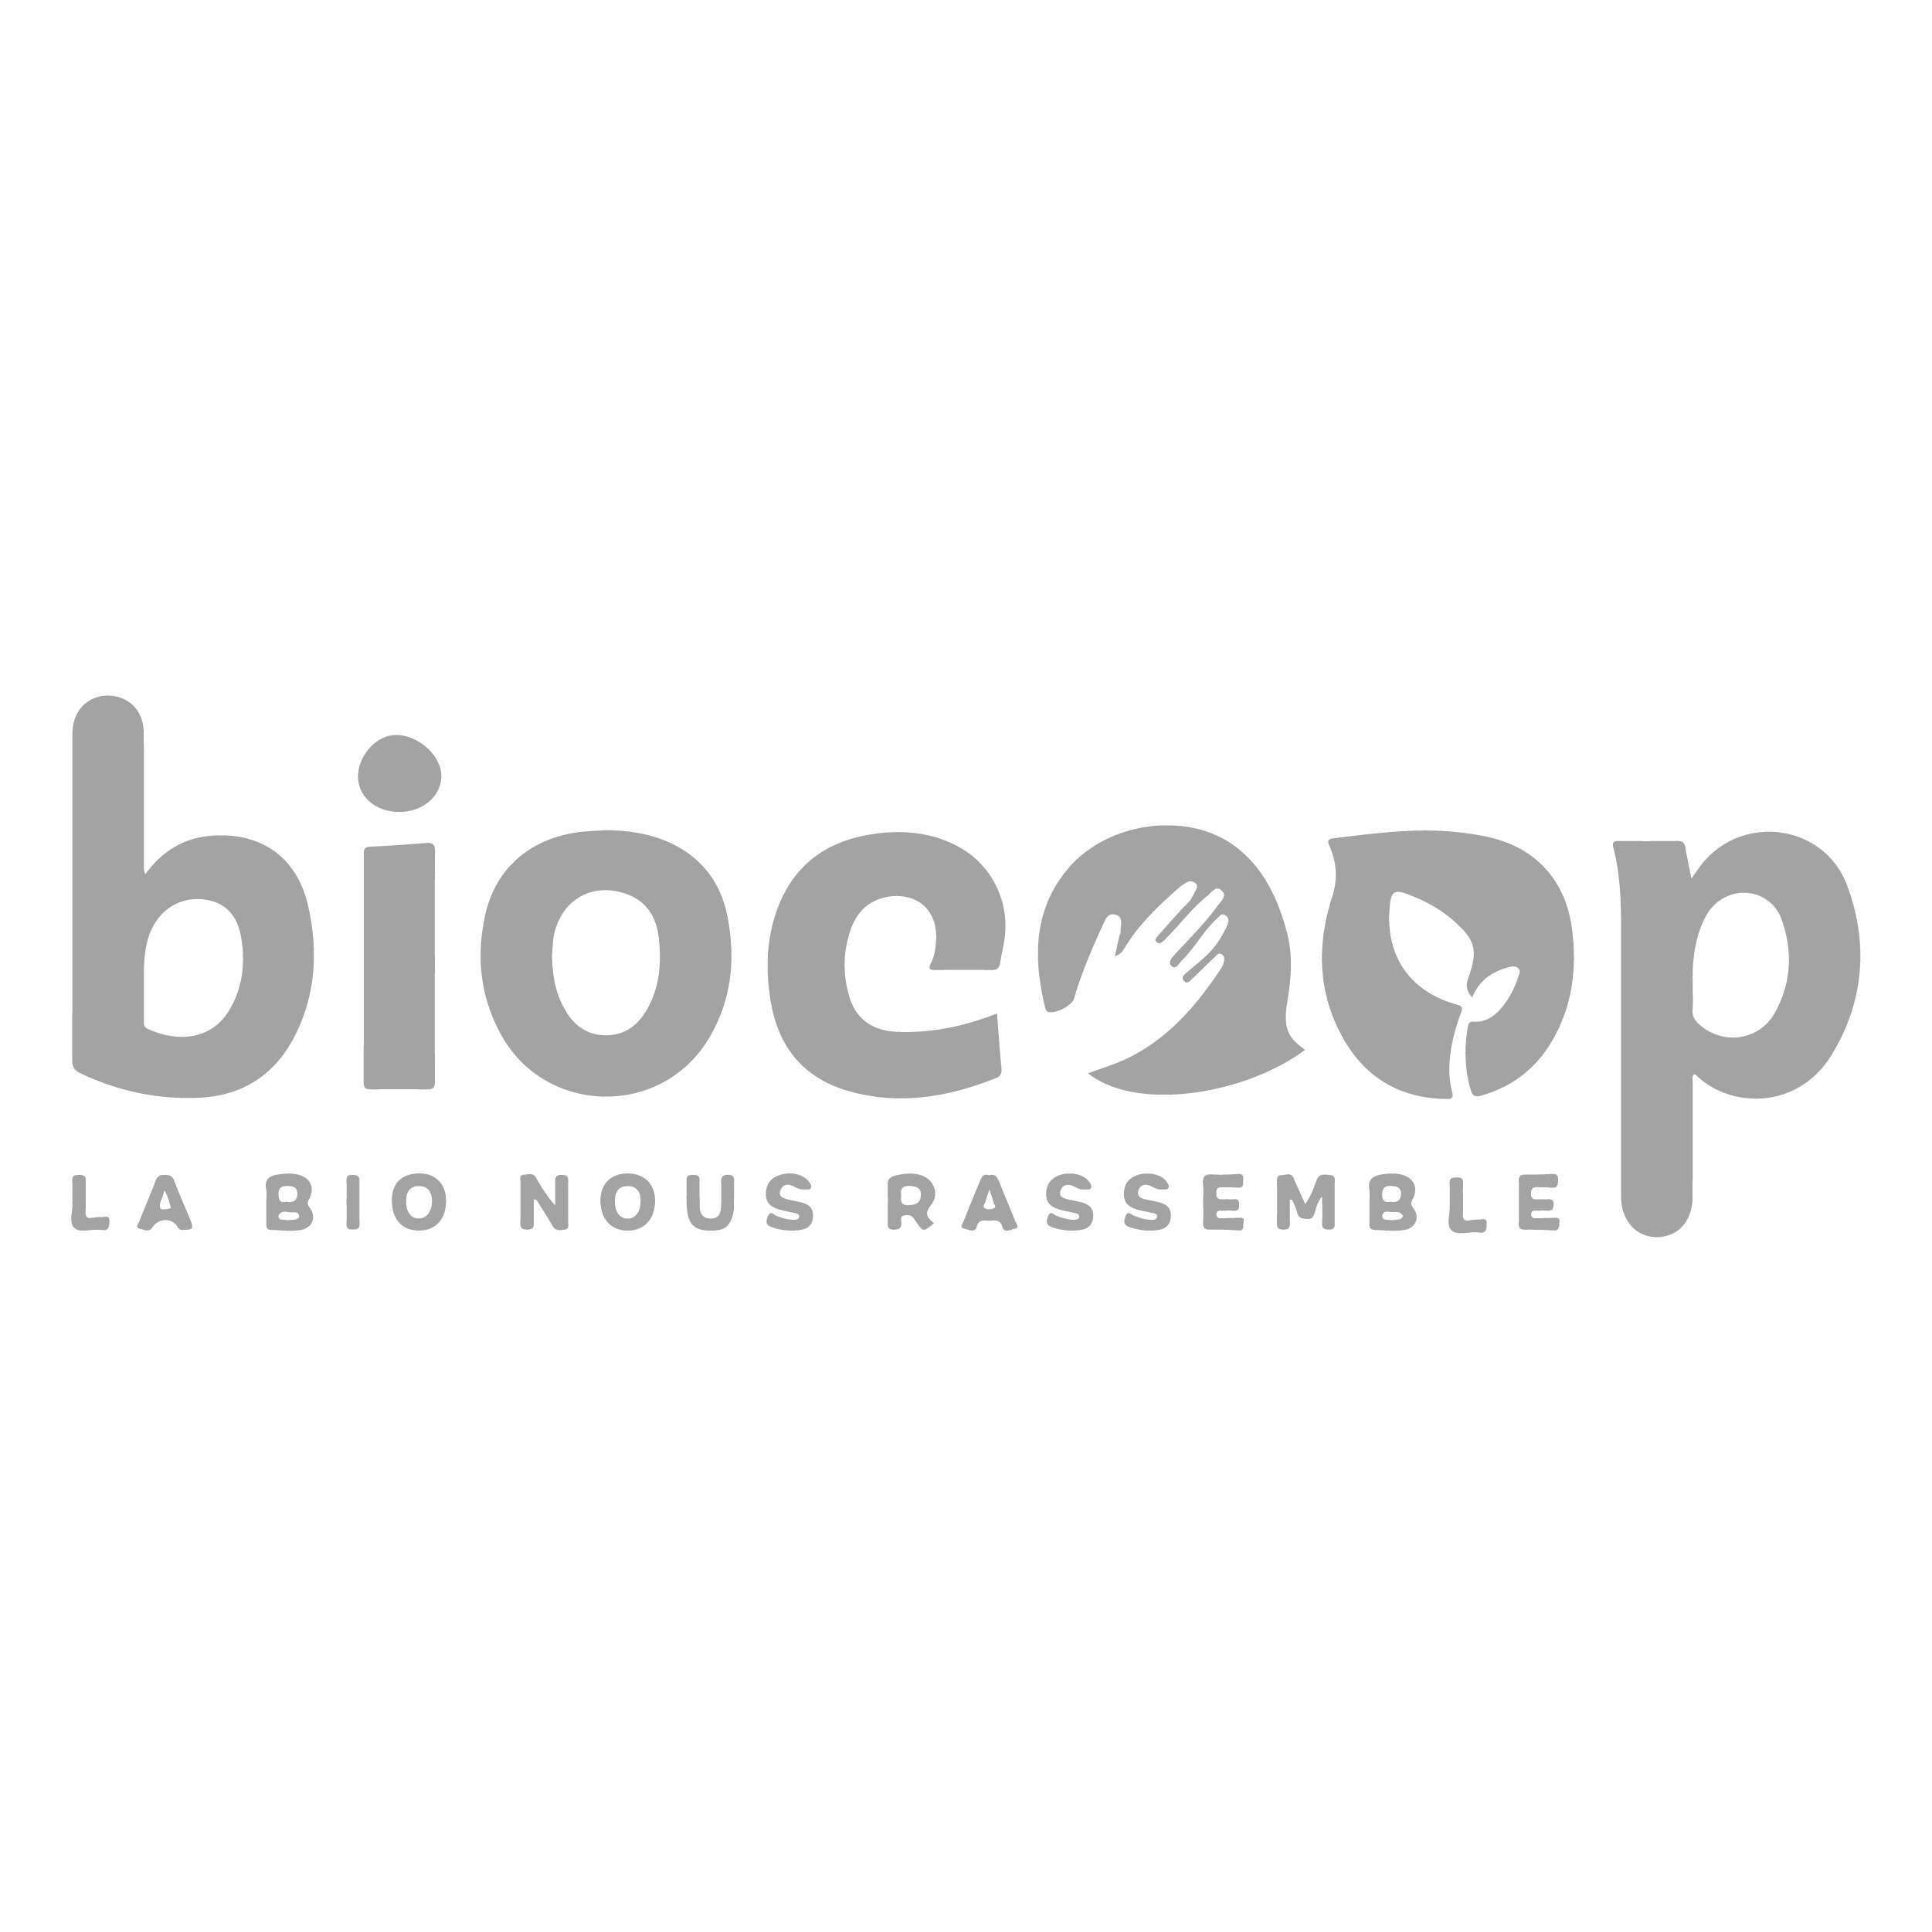 Breakout-company-agence-communication-logo-biocoop